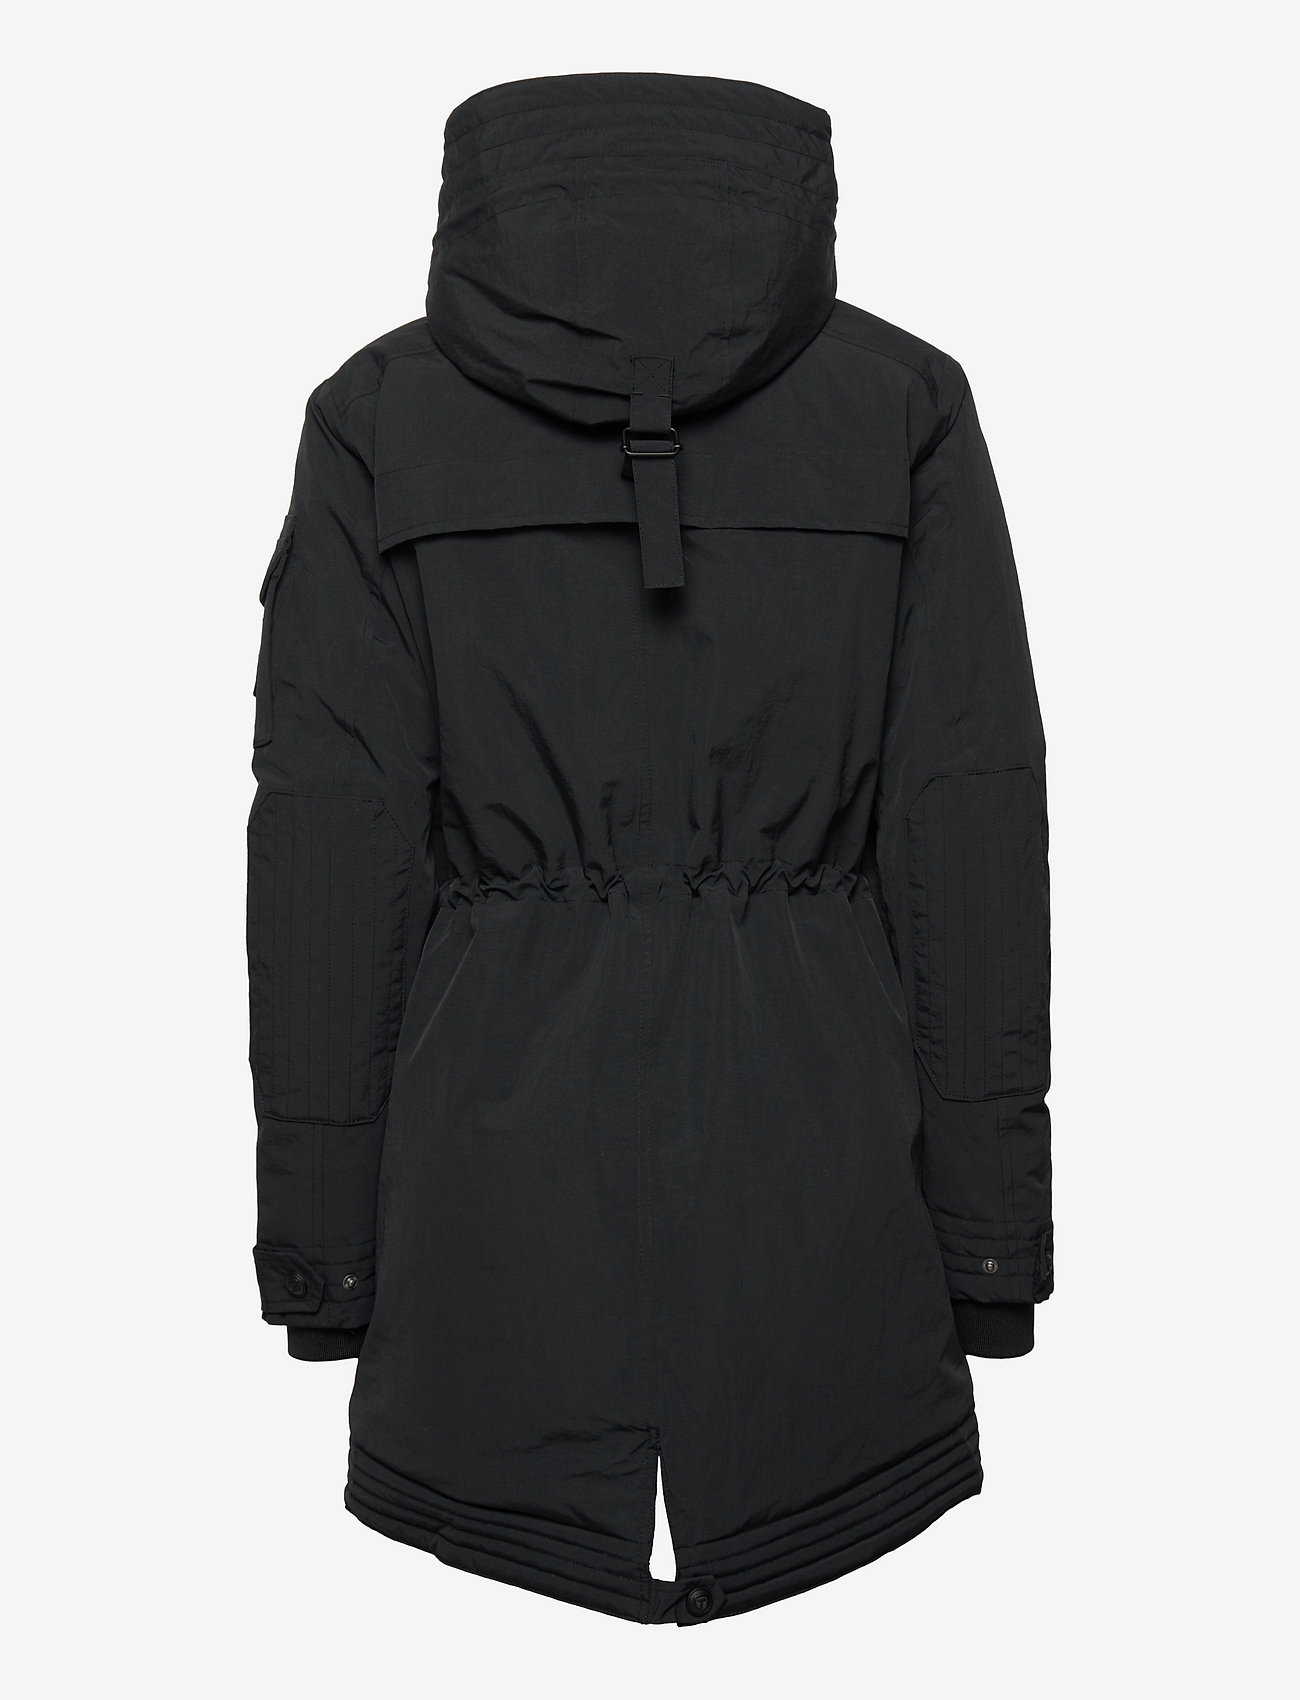 Tenson - Himalaya Ltd Jkt - outdoor & rain jackets - black - 1